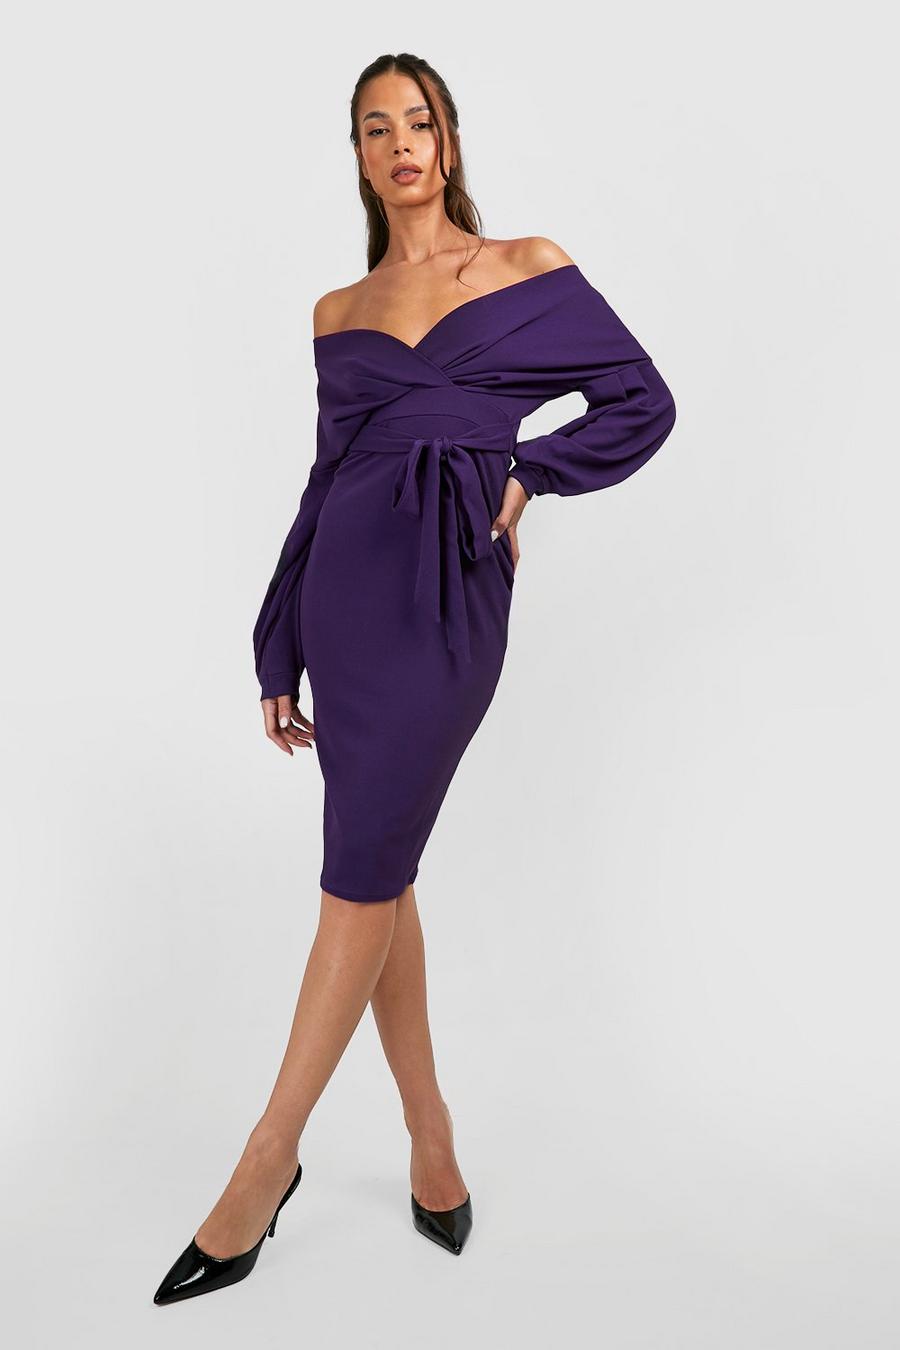 Jewel purple Off the Shoulder Wrap Midi Dress image number 1